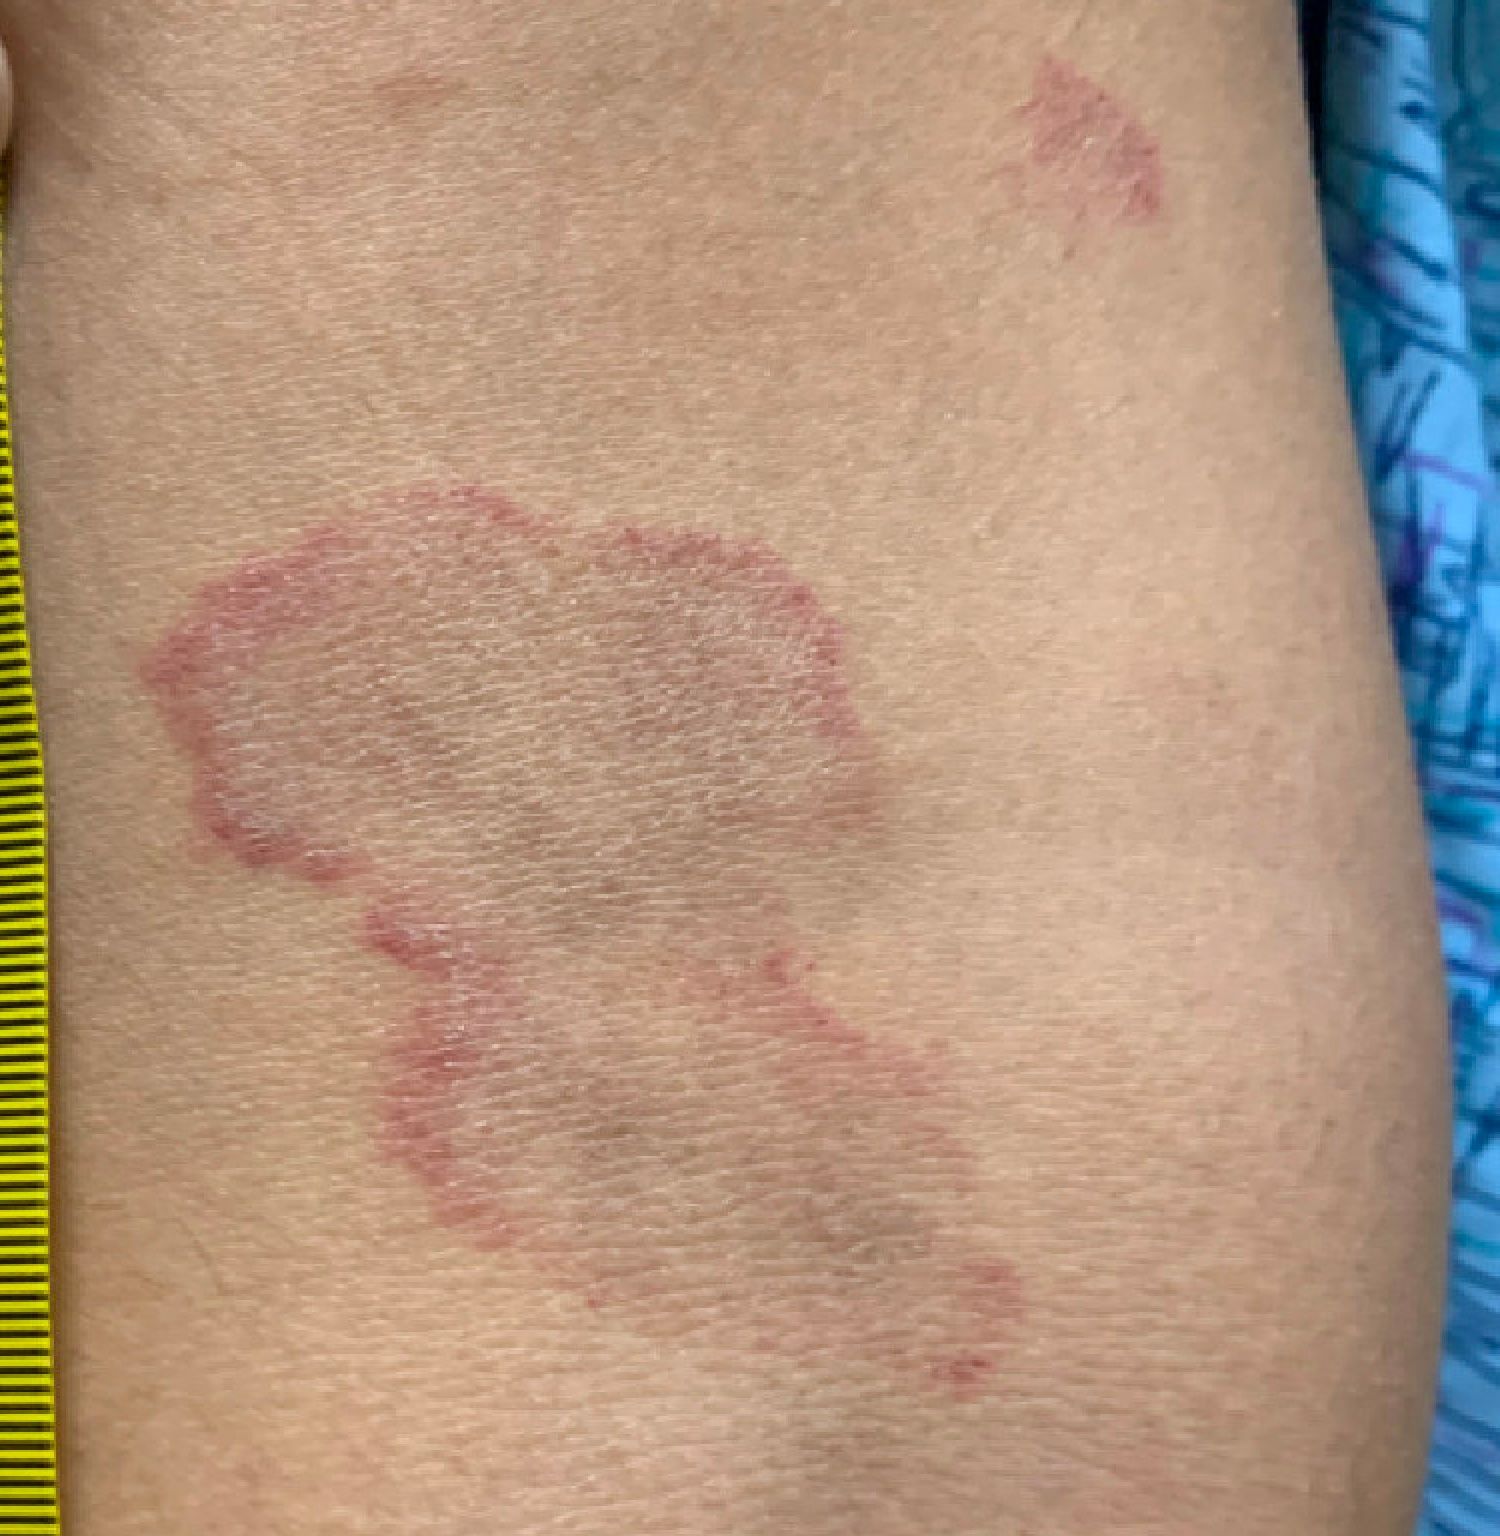 pinpoint rash on 9 year old abdomen